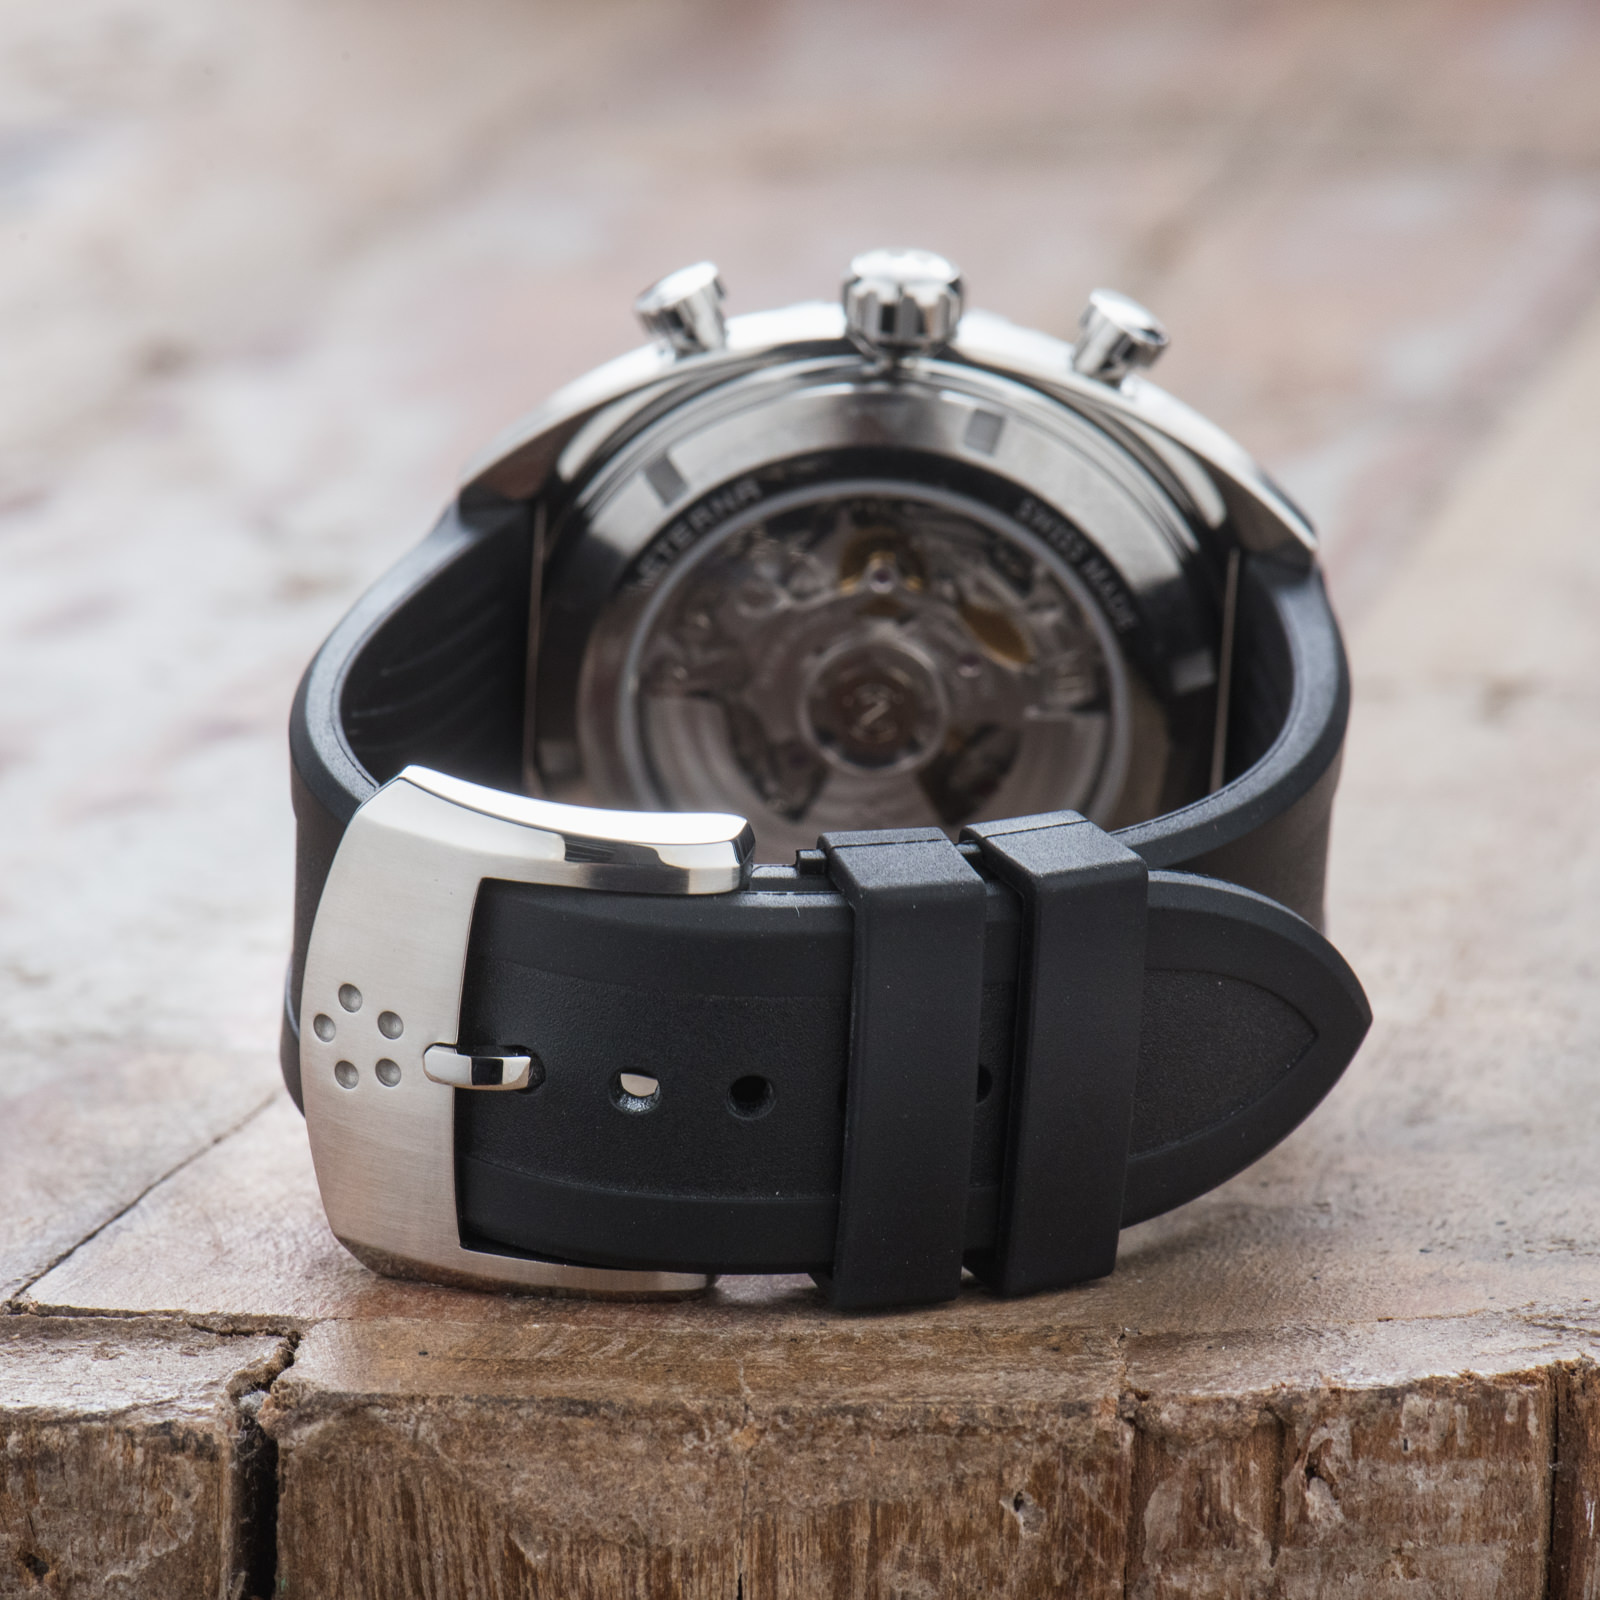 New Eterna Super KonTiki Chronograph Manufacture Automatic Black watch 7770.41